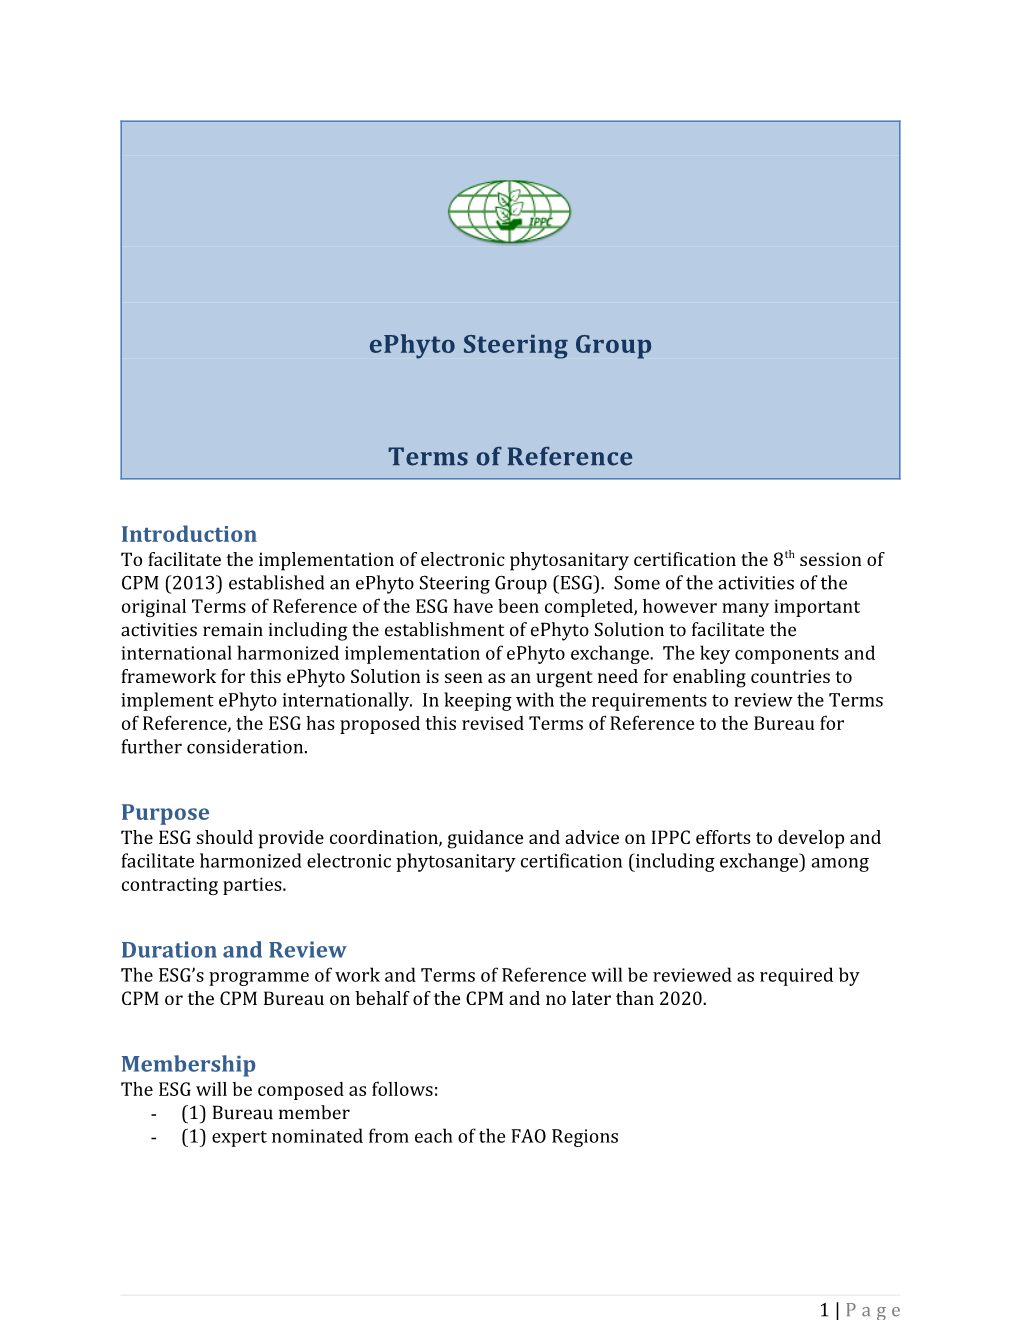 Ephyto Steering Group